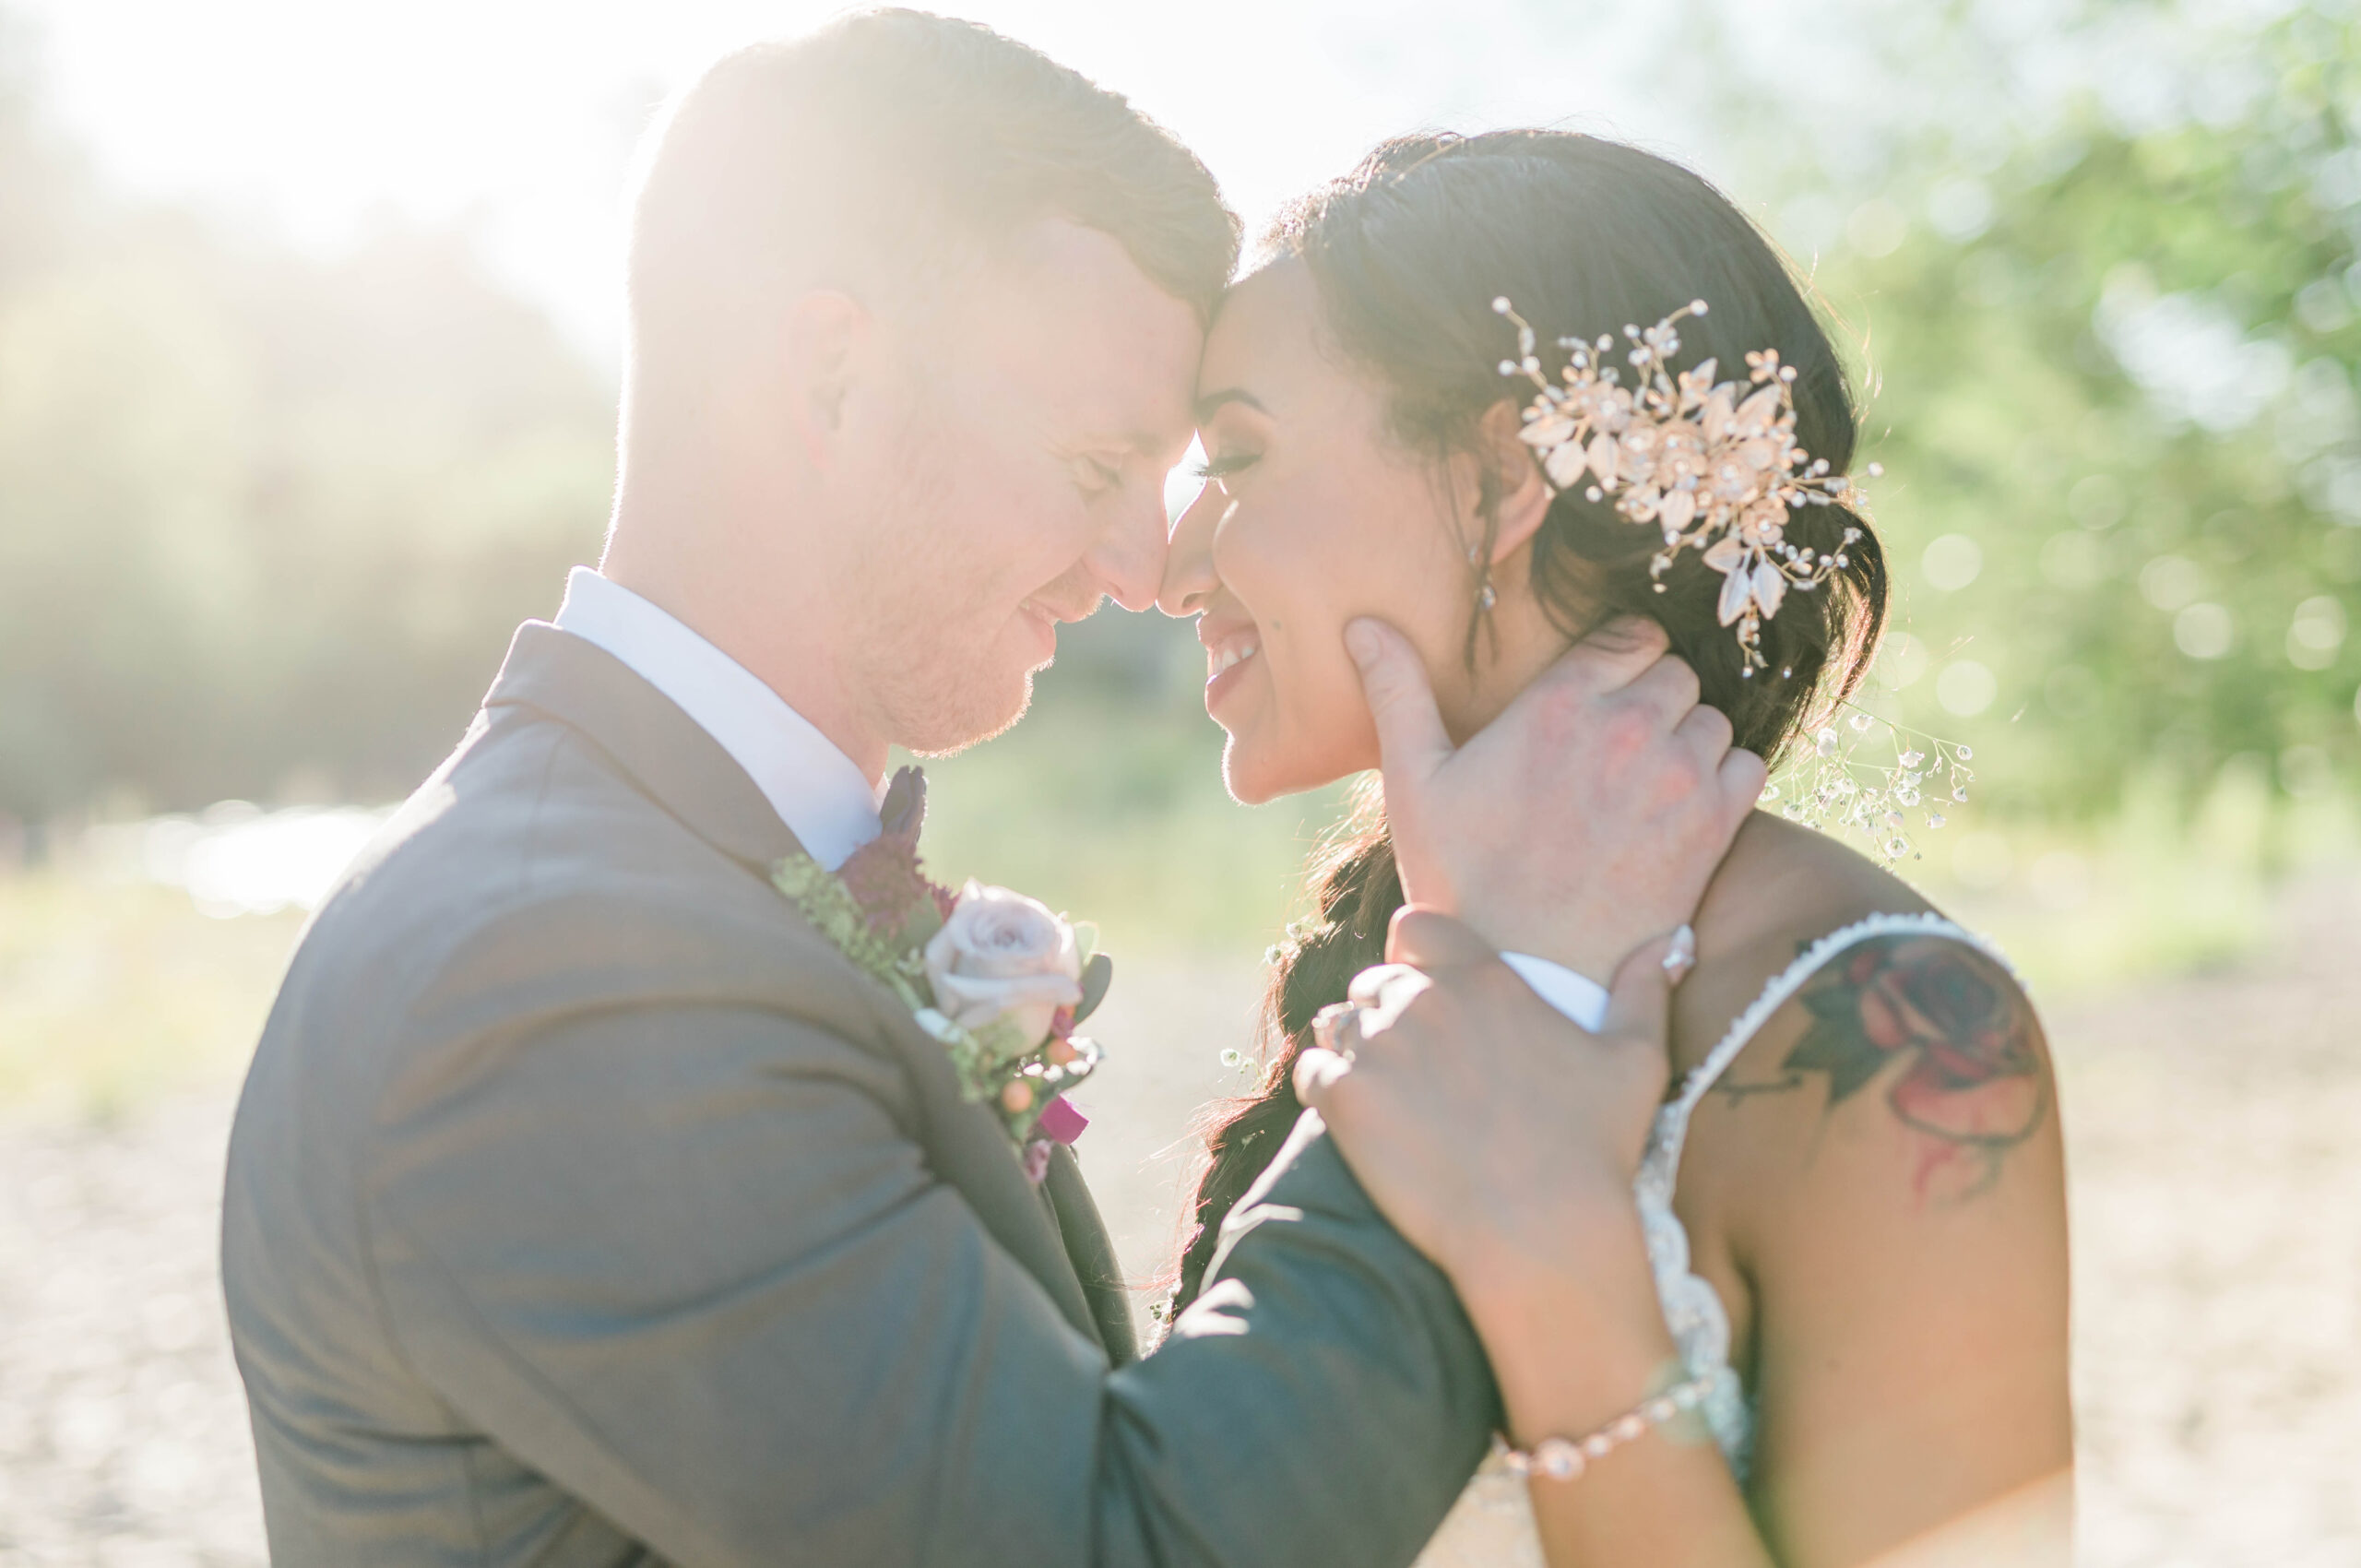 Boise wedding photographer captures couple forehead to forehead at Boise wedding venue